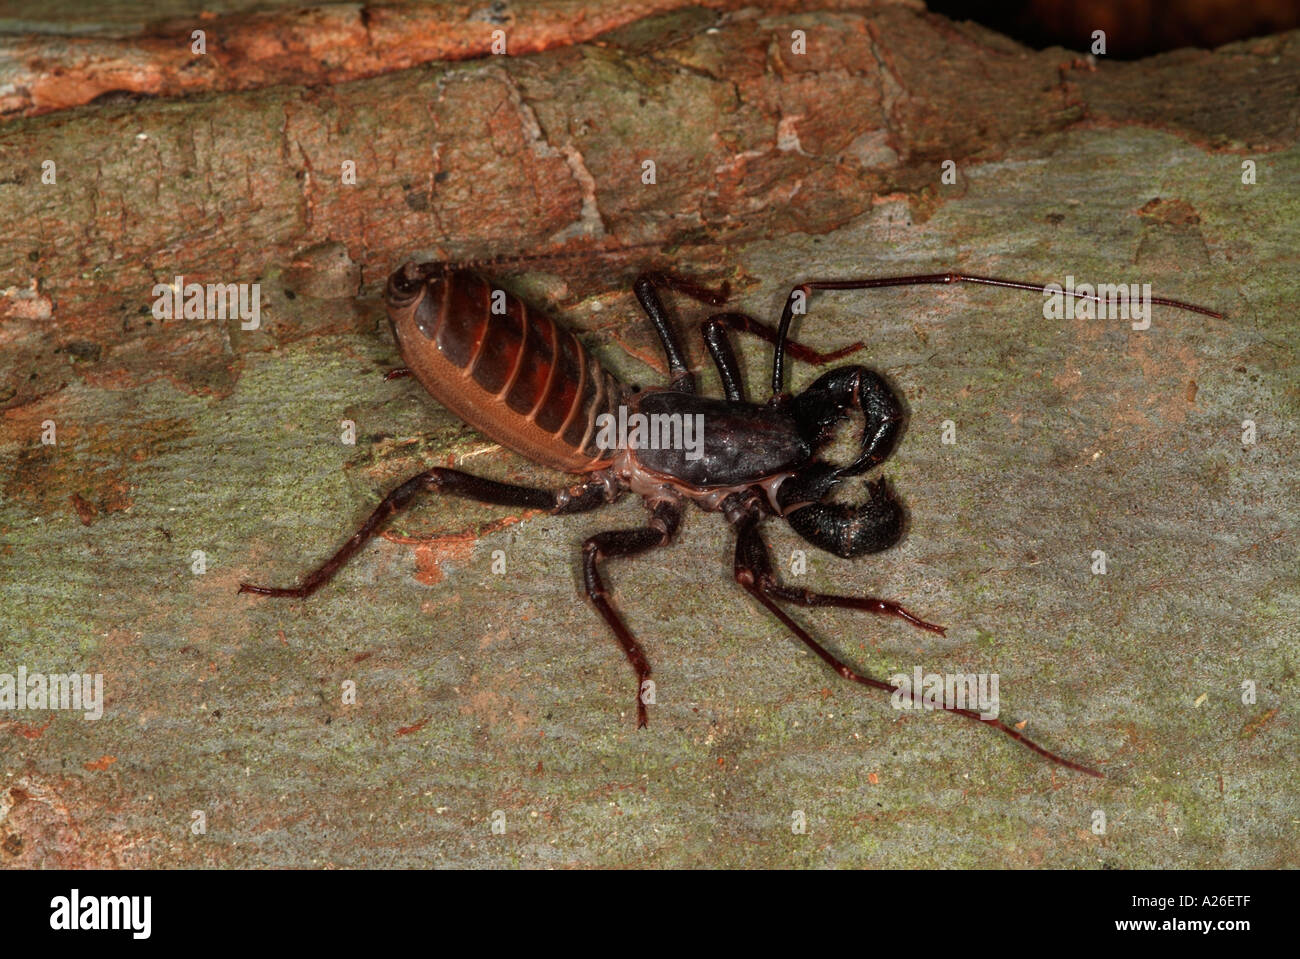 Vinegaroon Mastigoproctus gigantaus Texas Whip Scorpion emits an formic acid from glands at abdomen which smells like vinegar Stock Photo